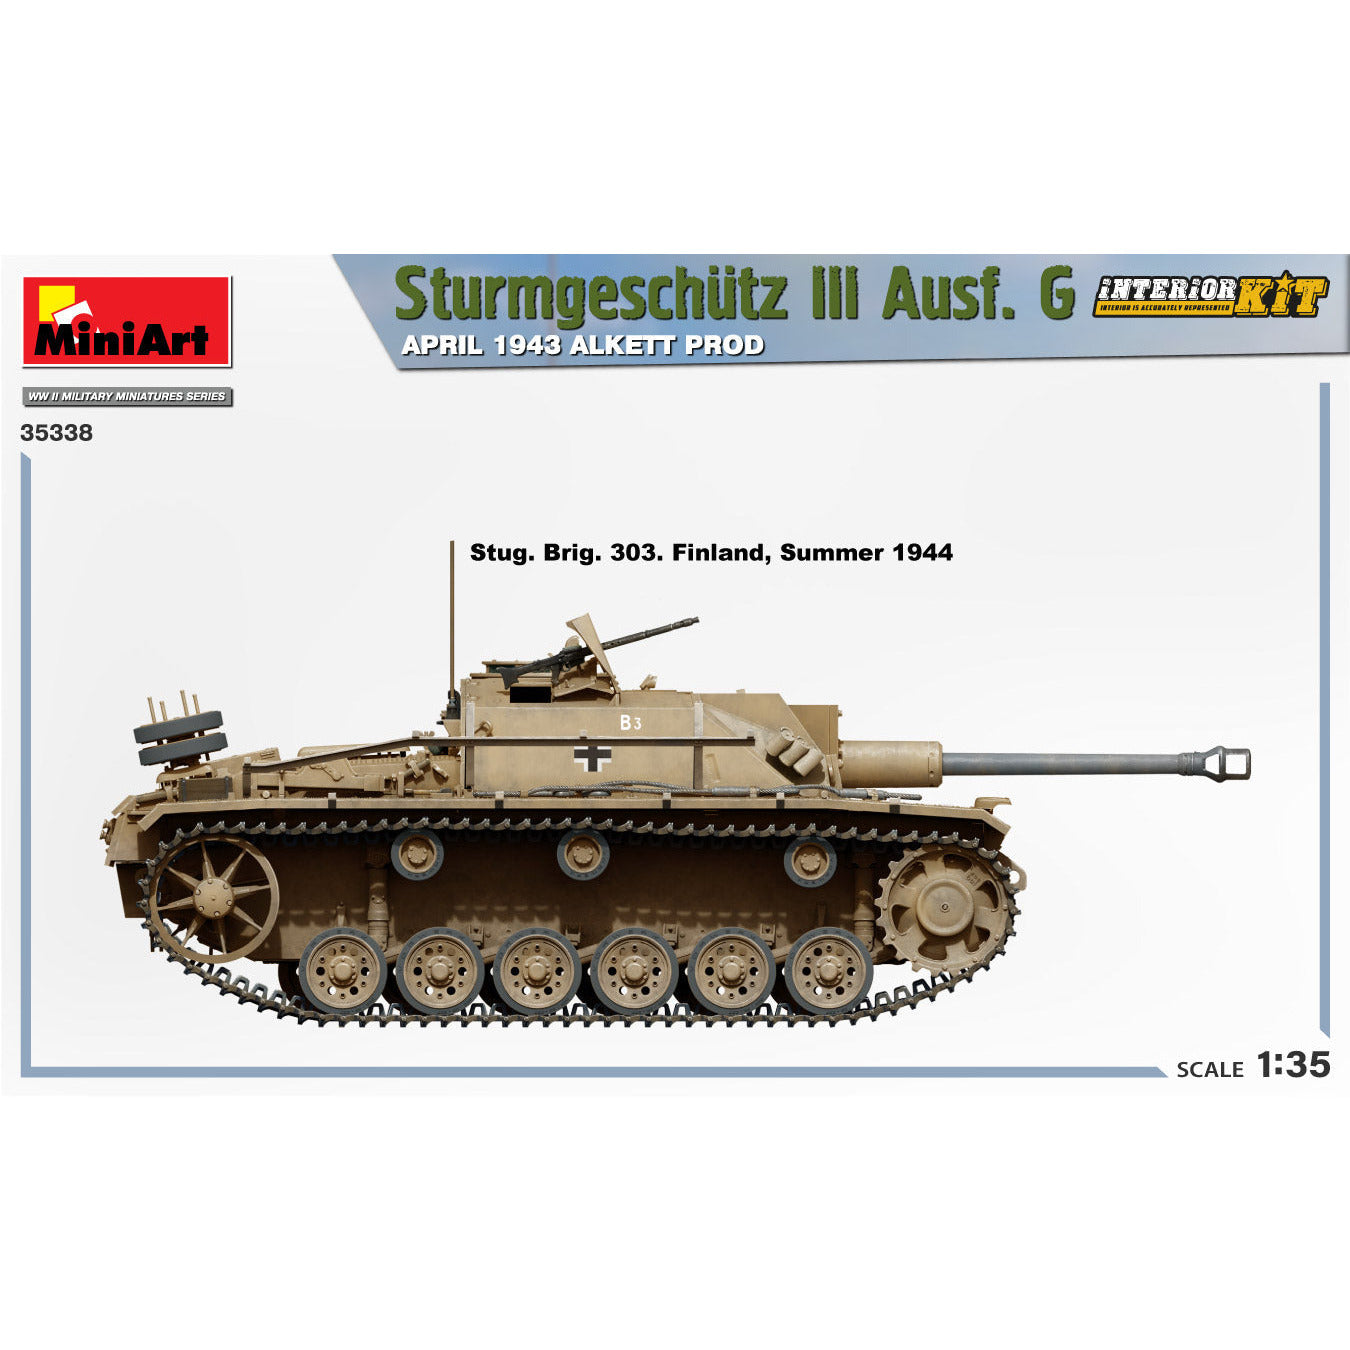 MINIART 1/35 Sturmgeschutz III Ausf. G April 1943 Alkett Prod. Interior Kit